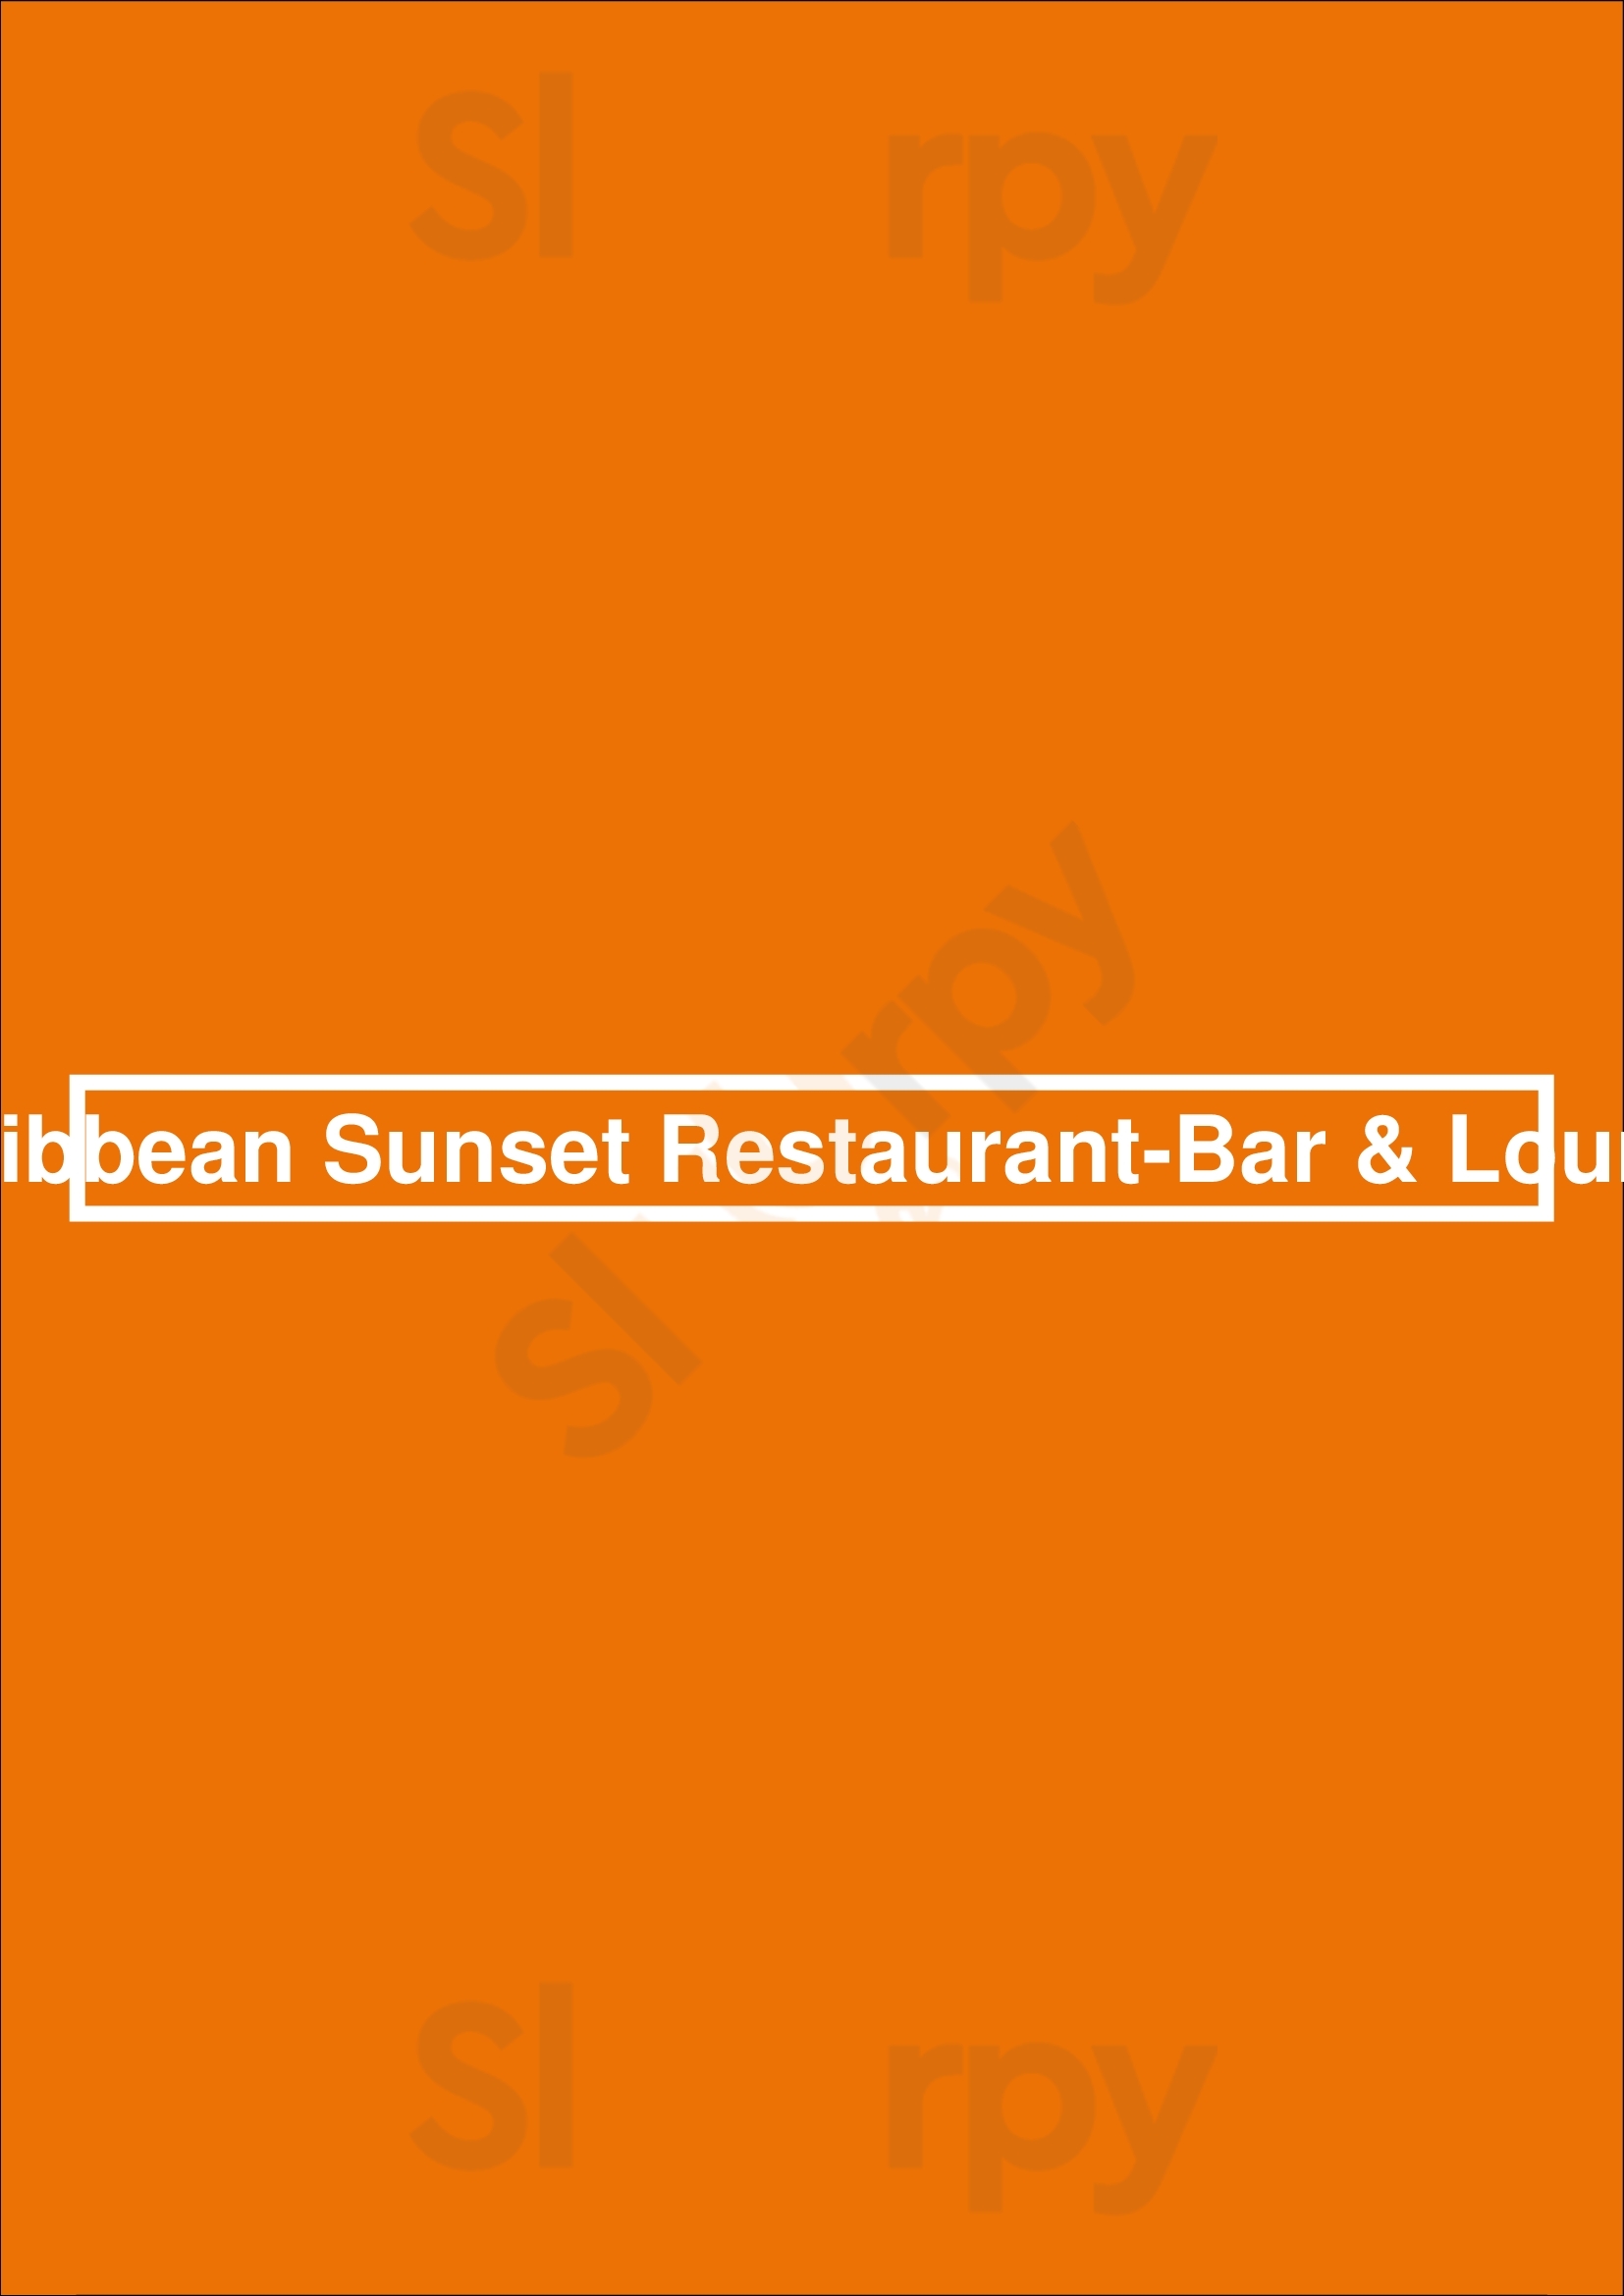 Caribbean Sunset Restaurant-bar & Lounge Mississauga Menu - 1